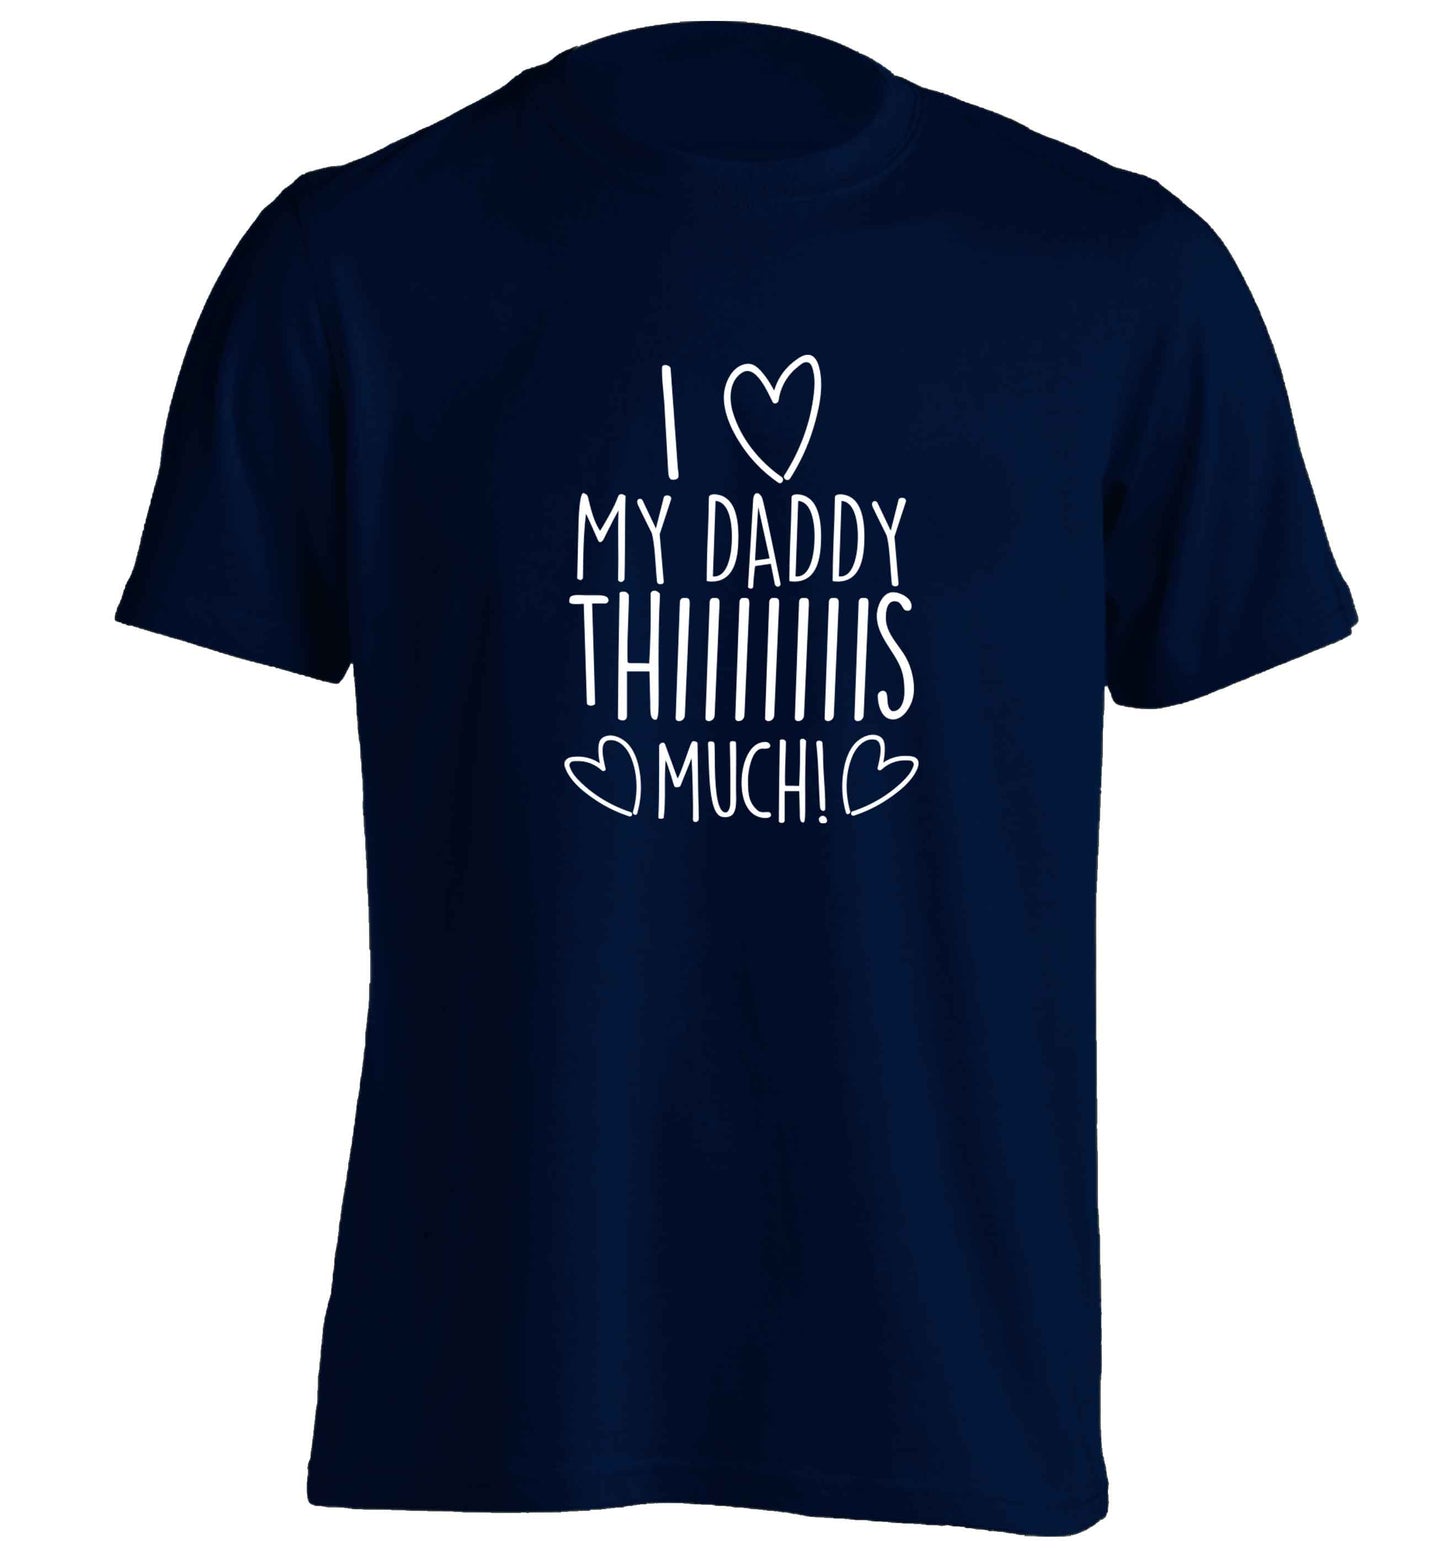 I love my daddy thiiiiis much! adults unisex navy Tshirt 2XL